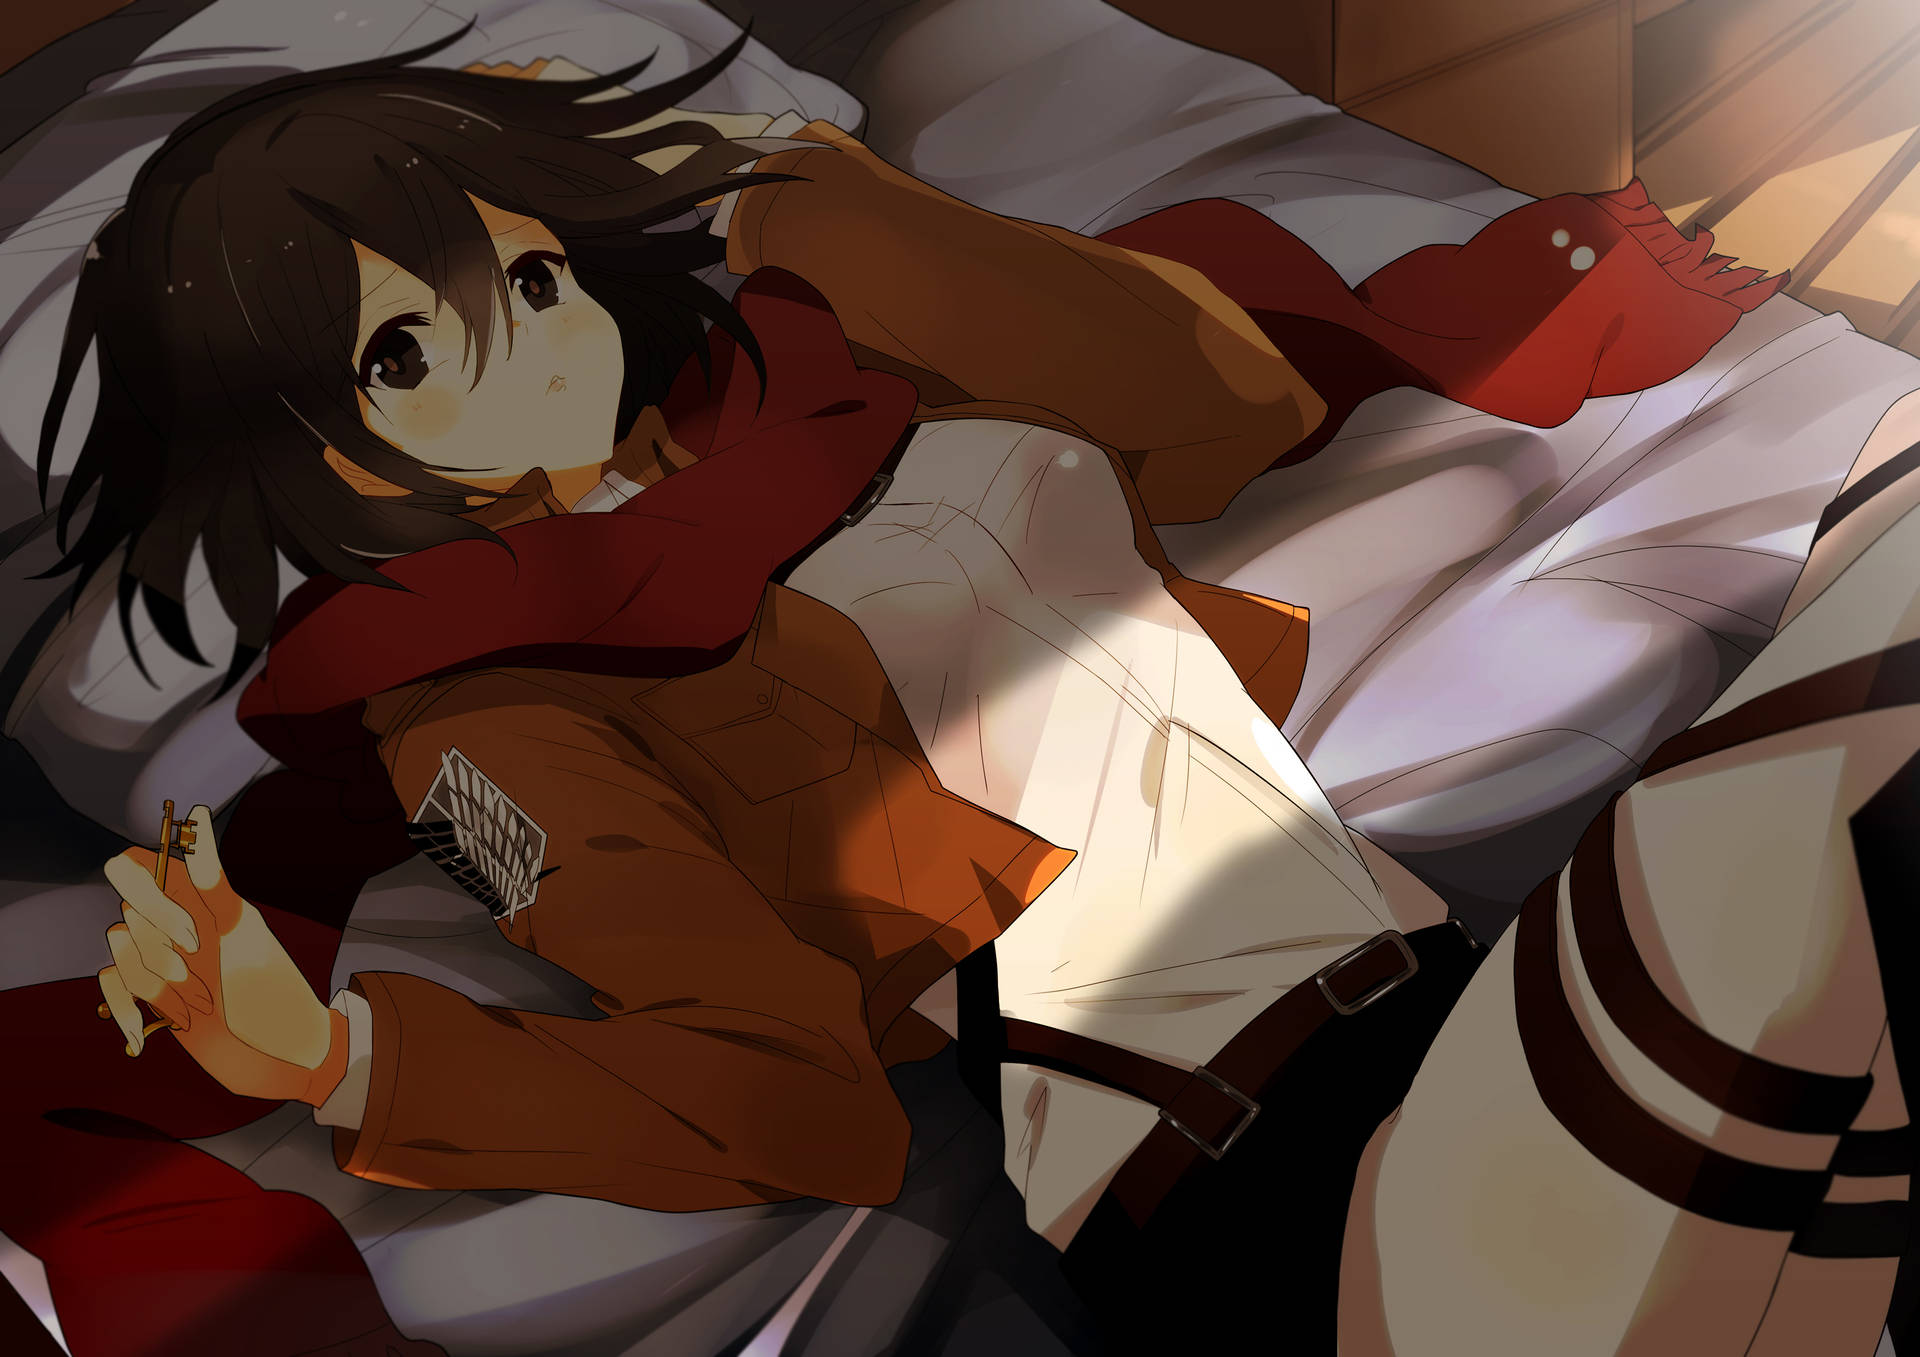 Mikasa Ackerman In Bed